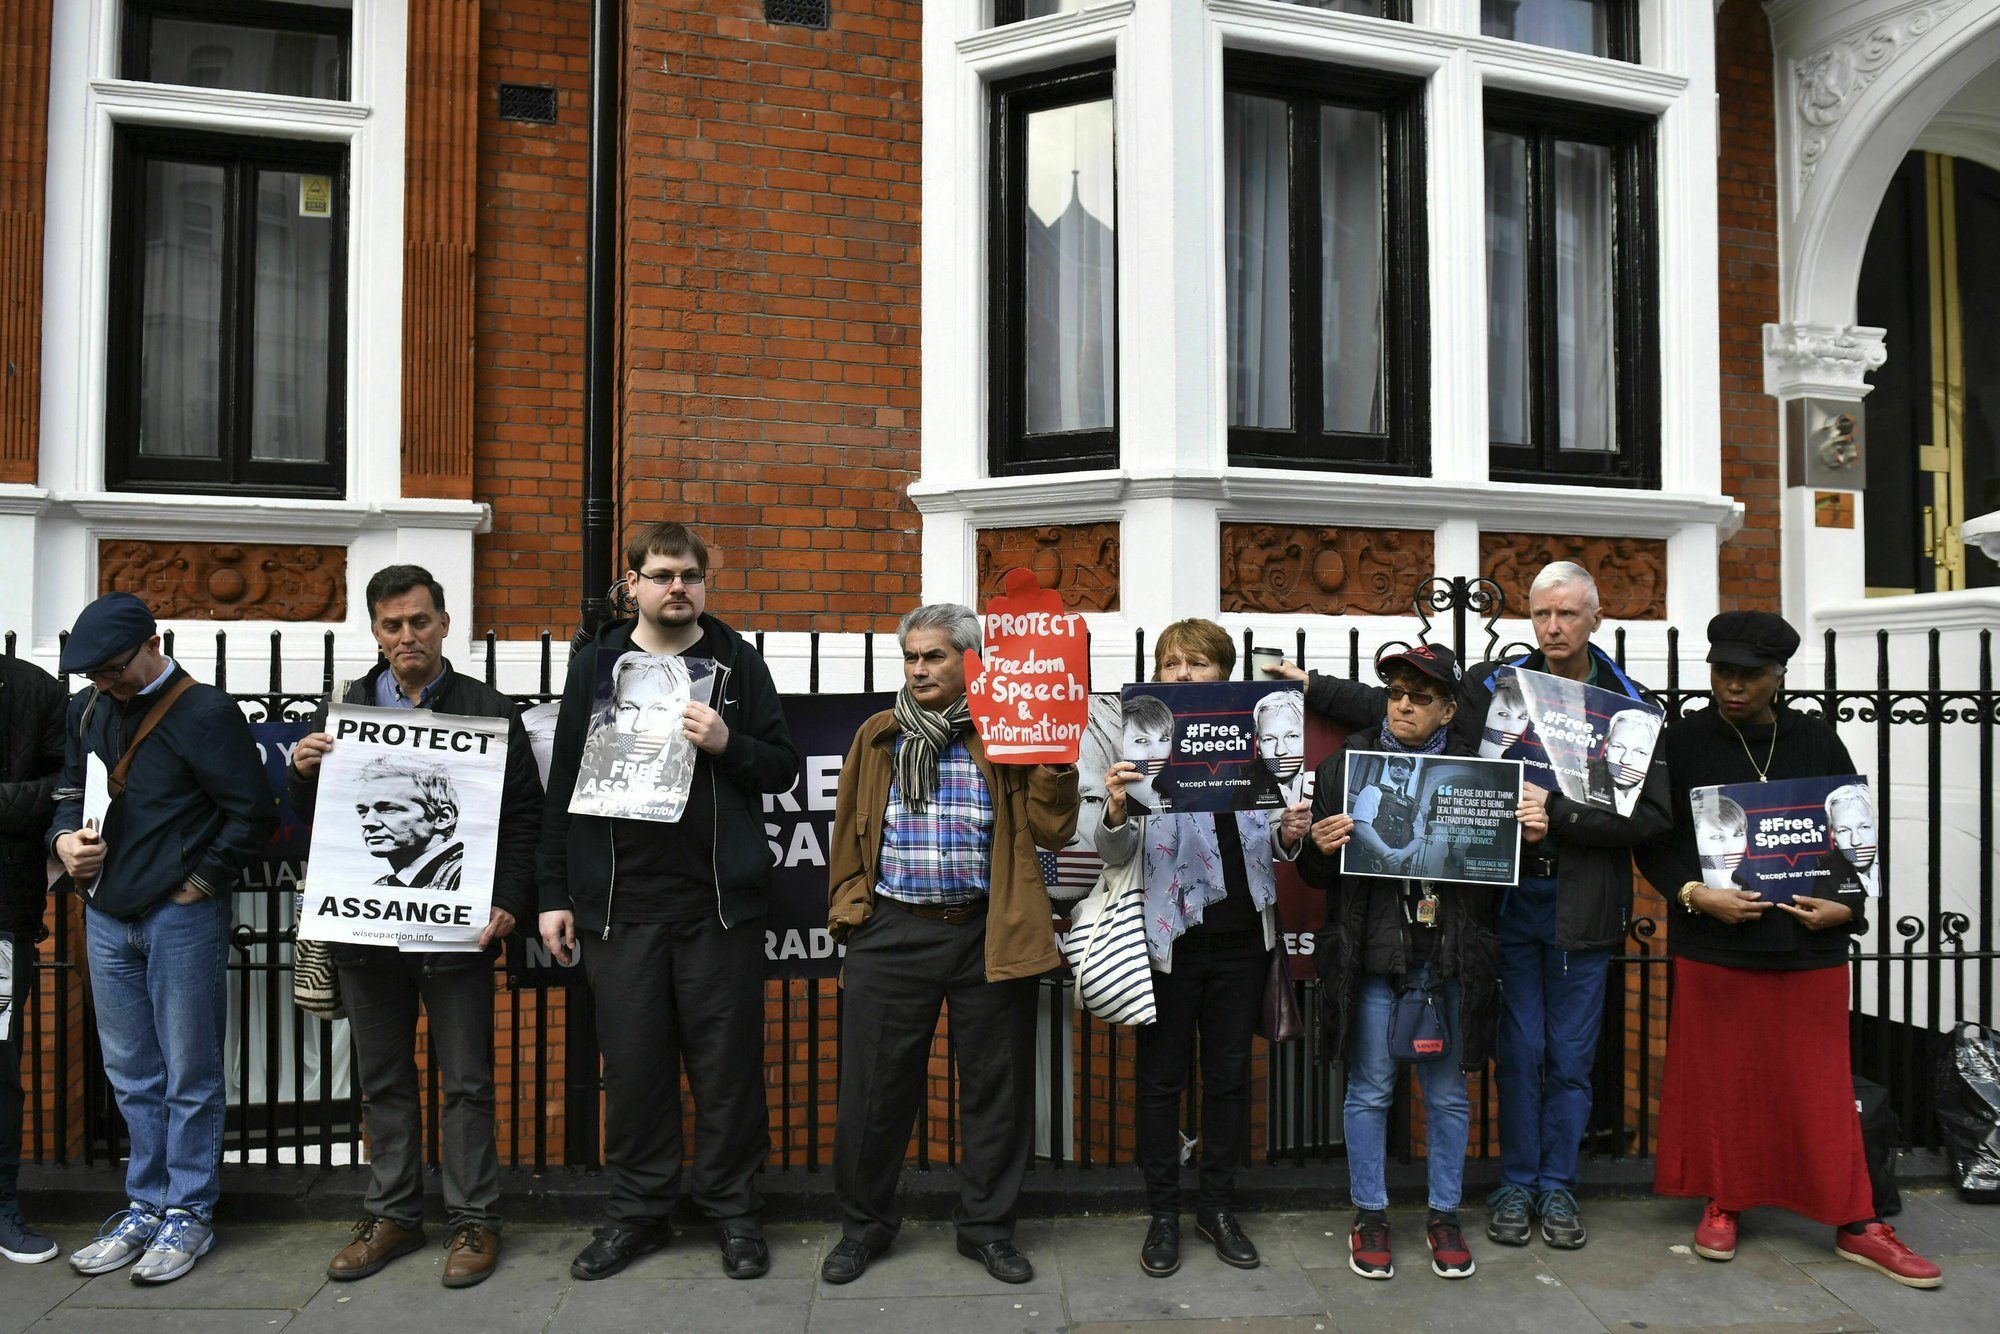 protest assange london embassy ecuasor